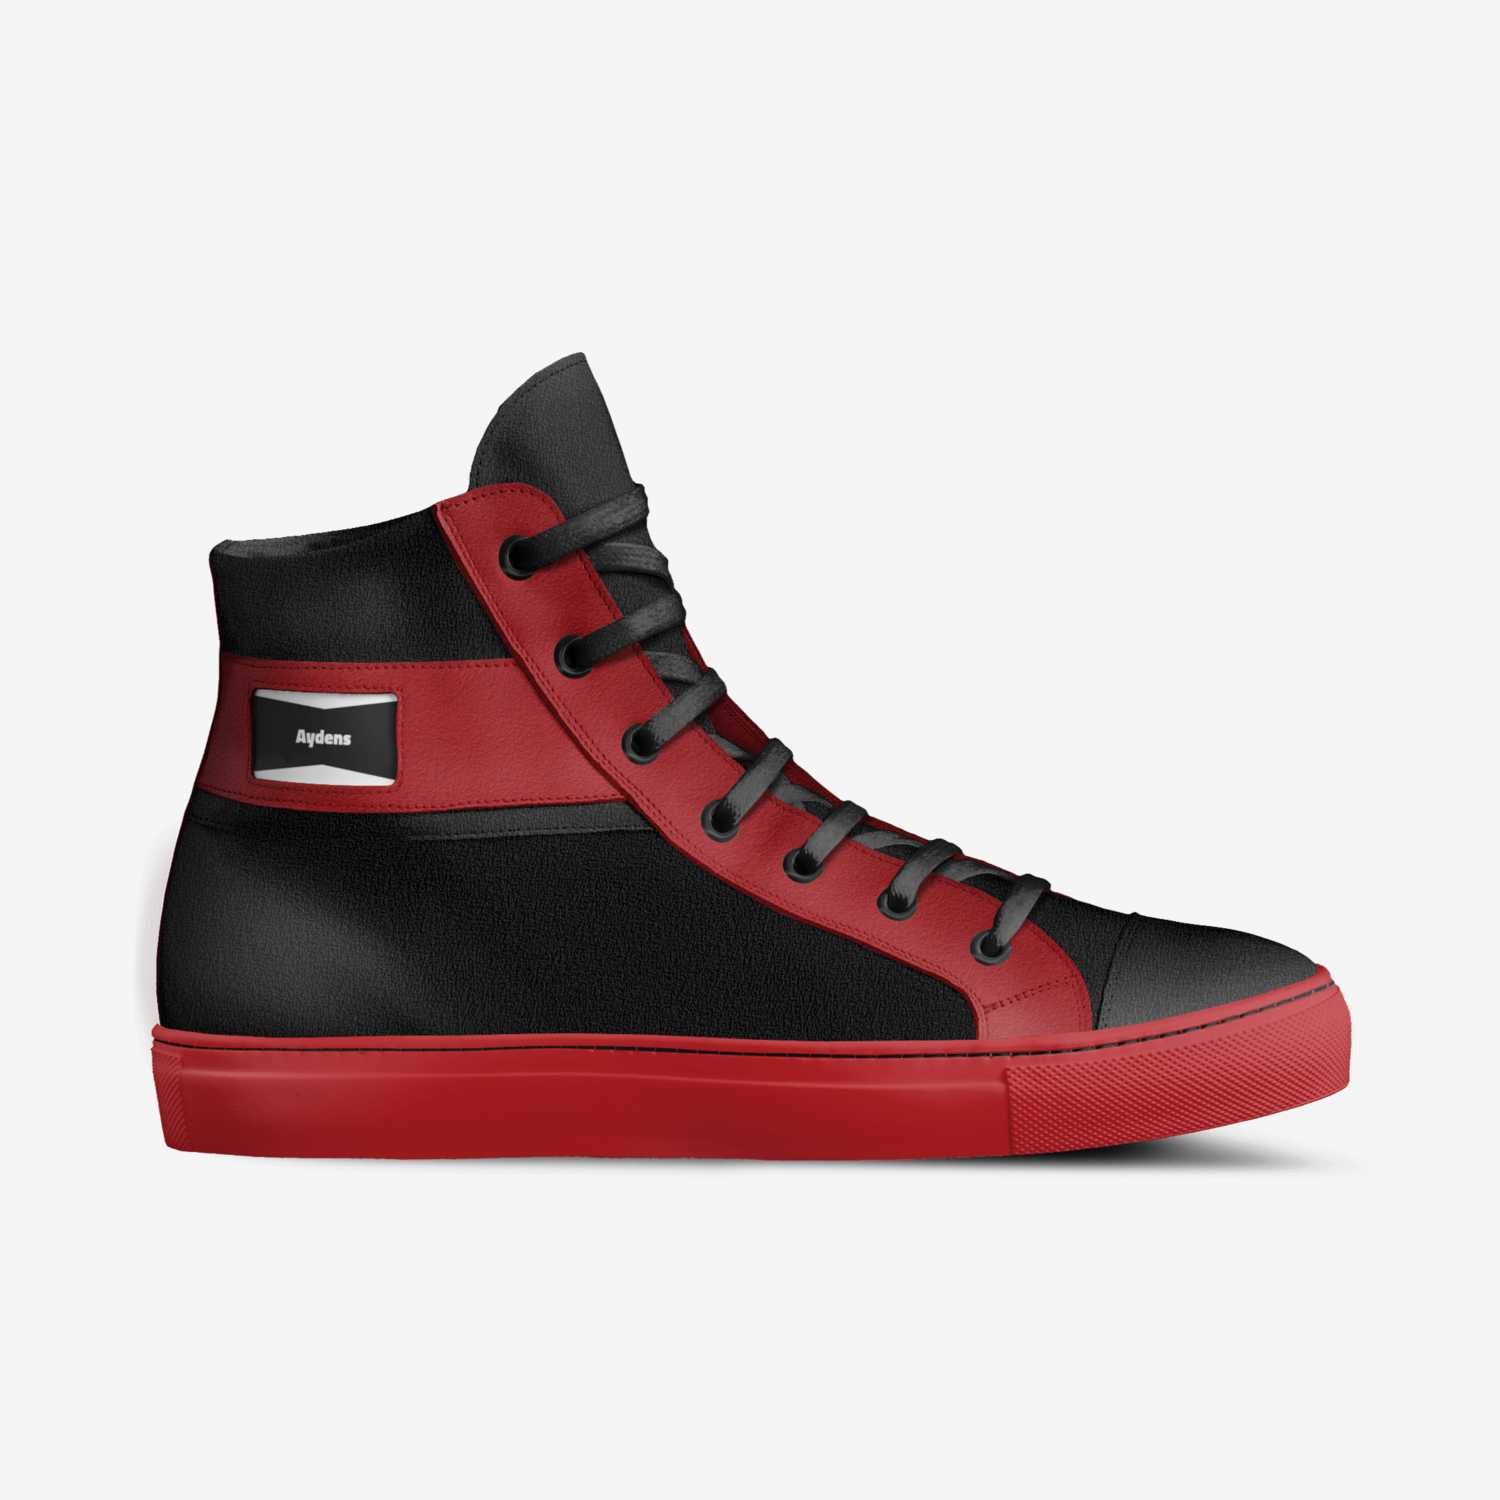 Aydens | A Custom Shoe concept by Ayden